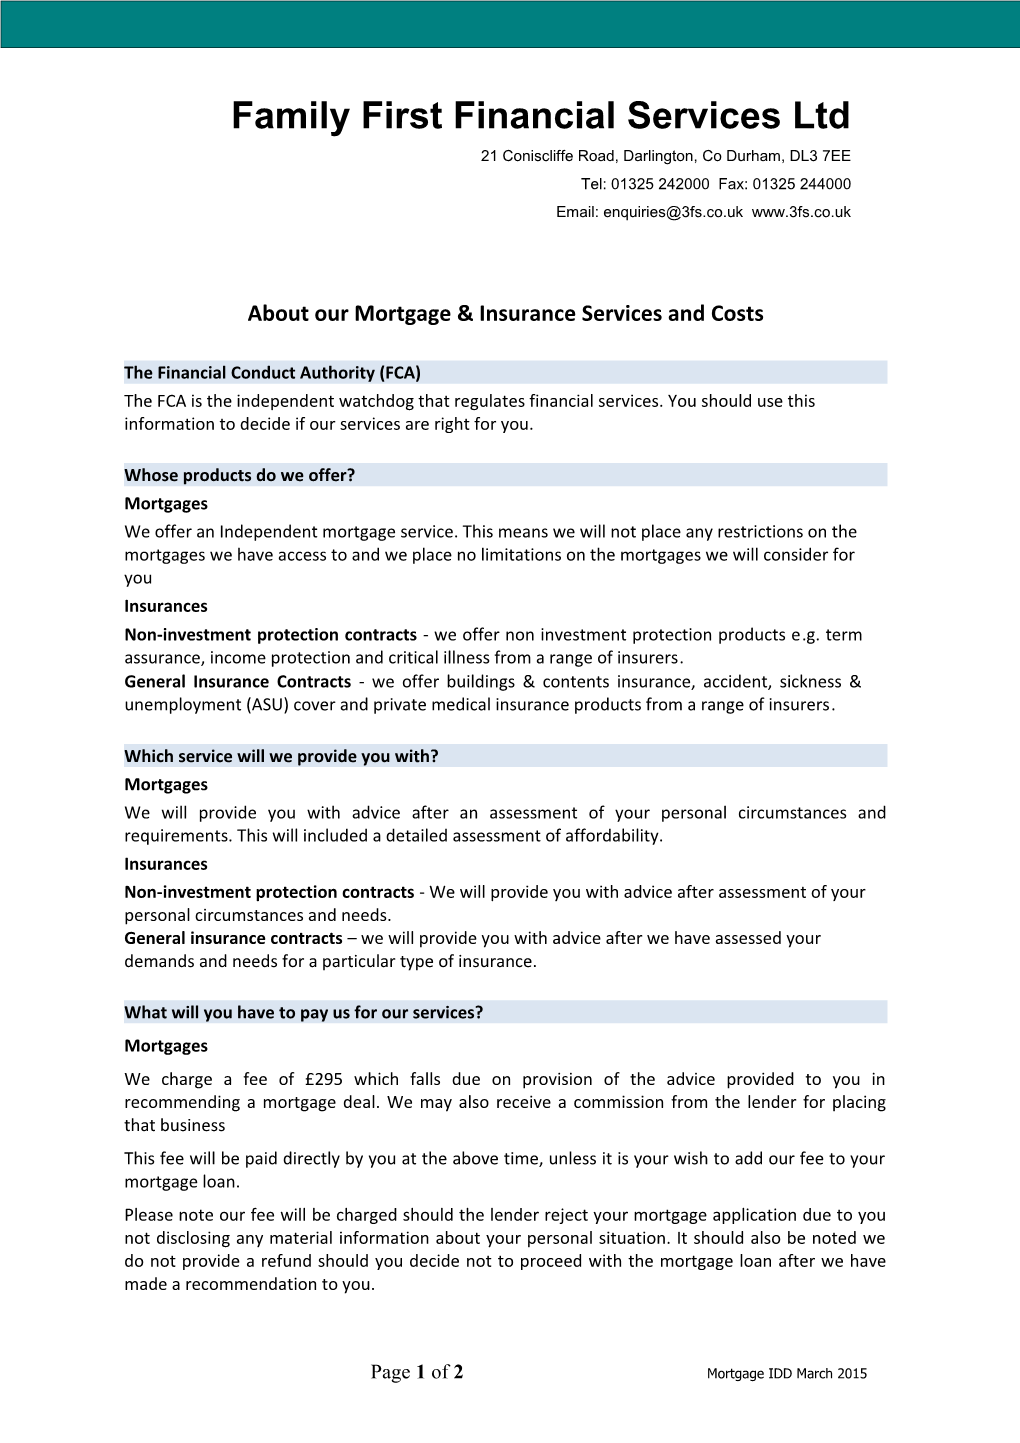 CIDD Mortgages Insurance Sept 11